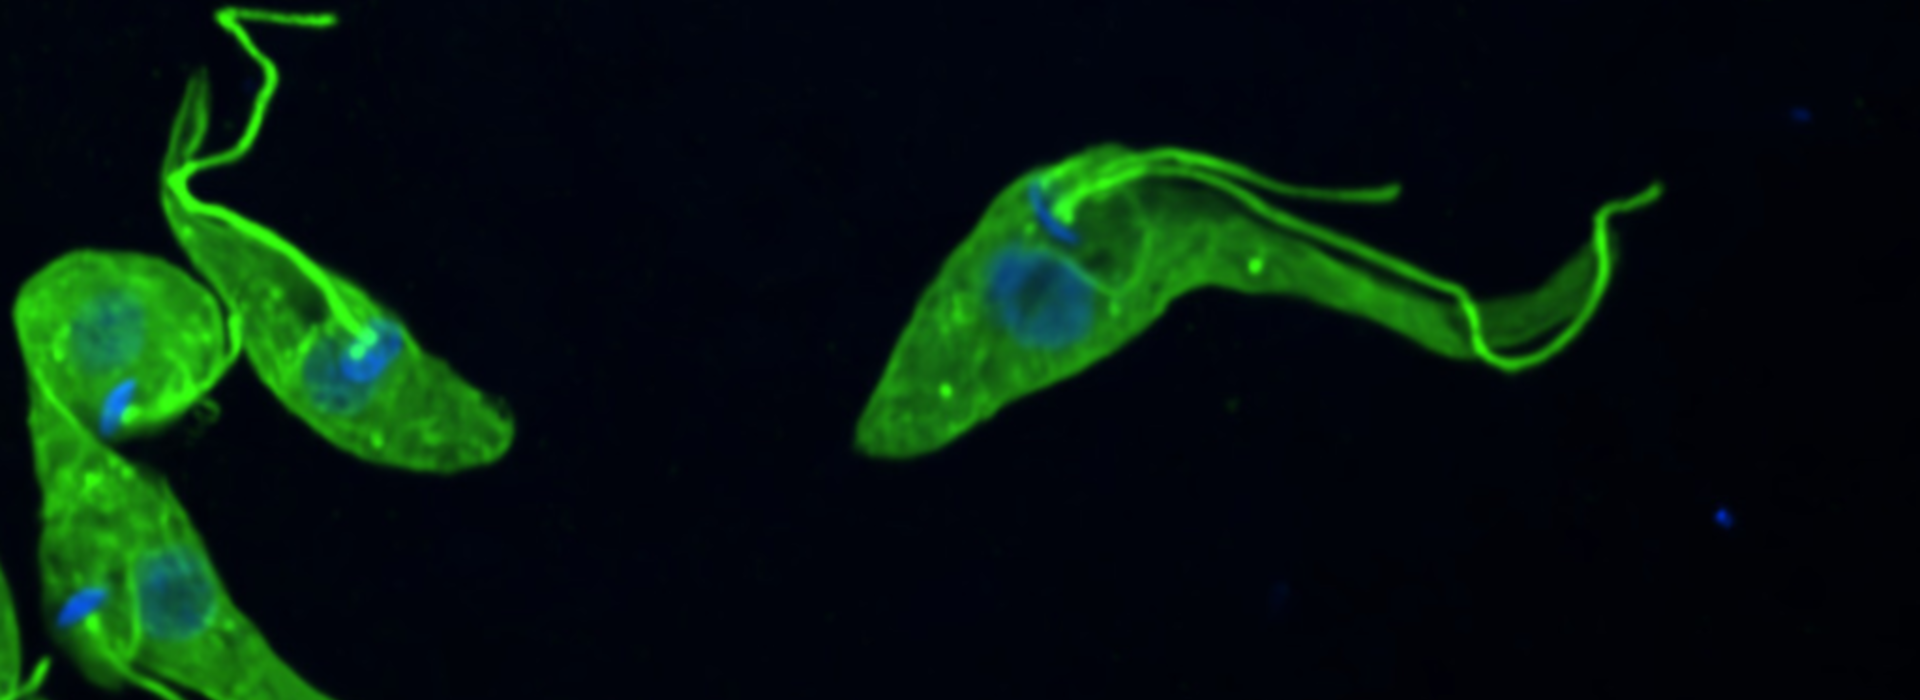 microscope view of trypanosoma parasites